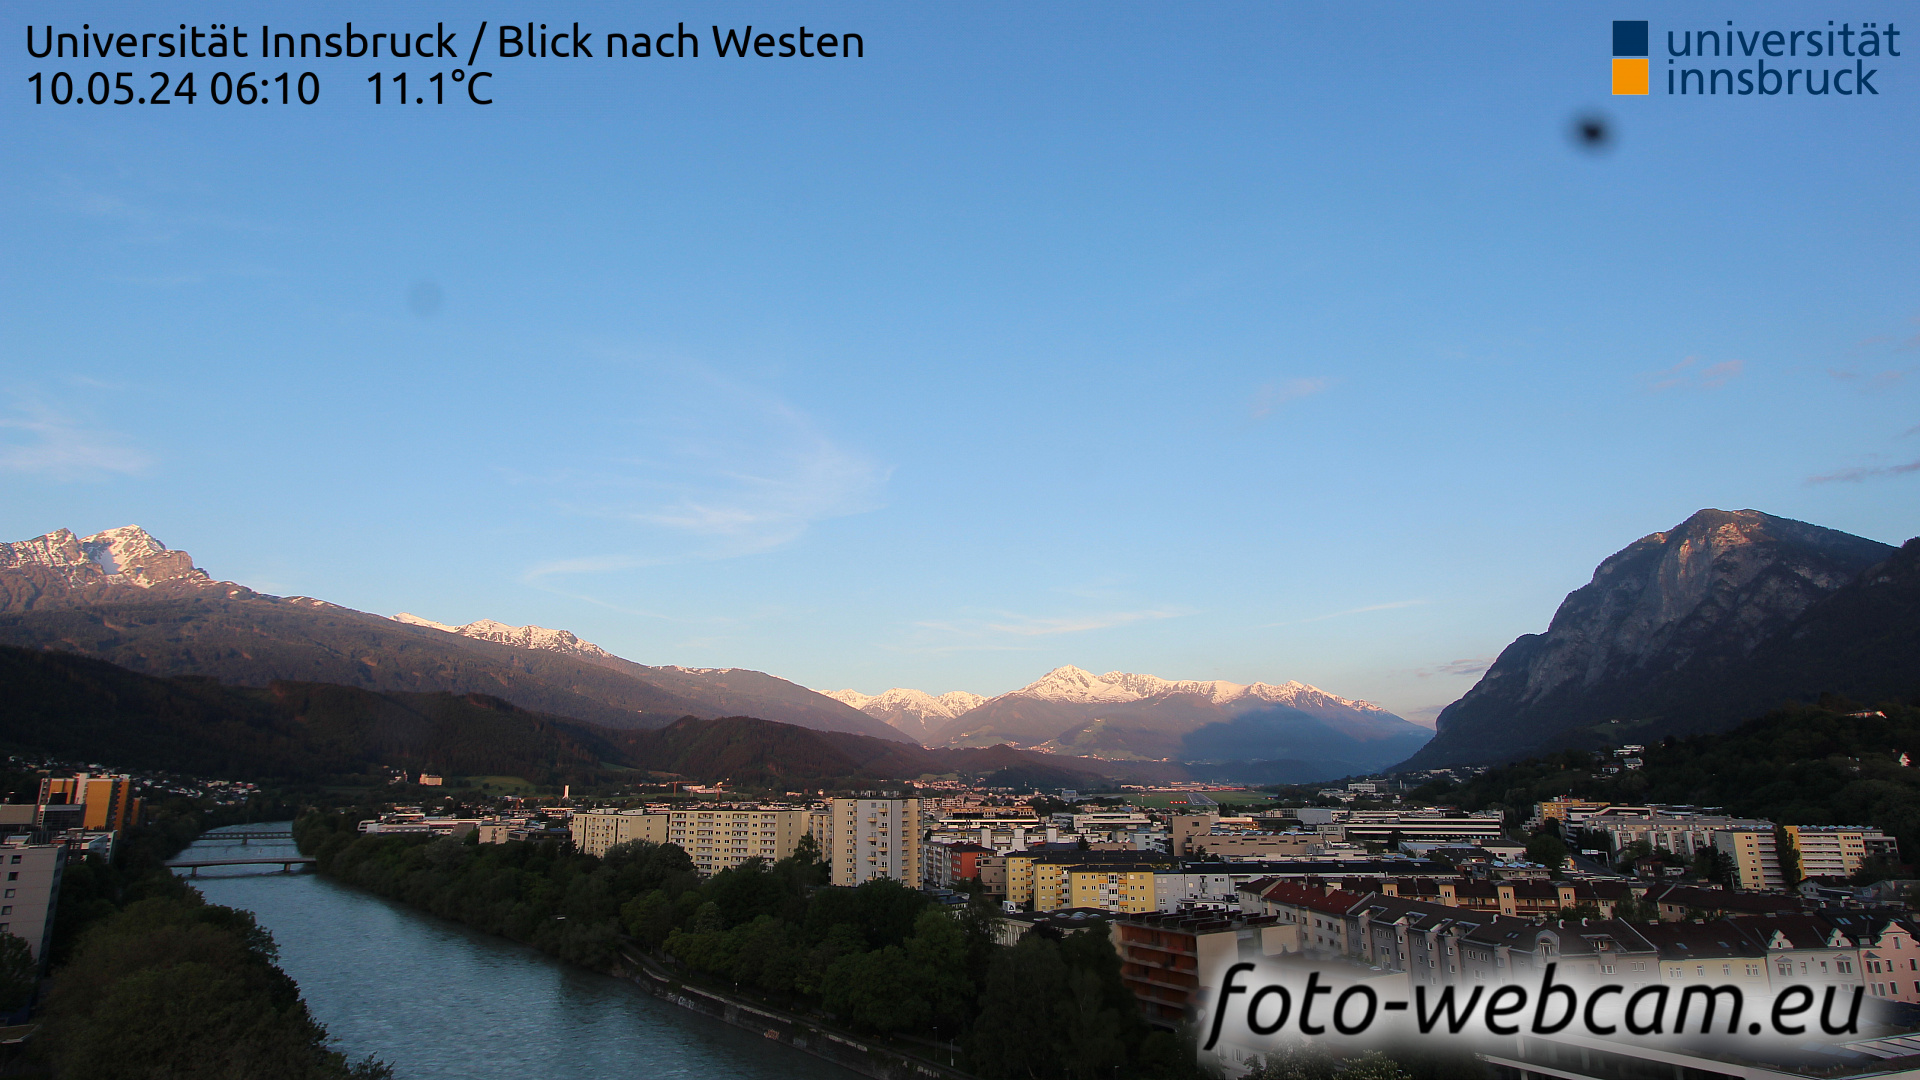 Innsbruck Man. 06:17